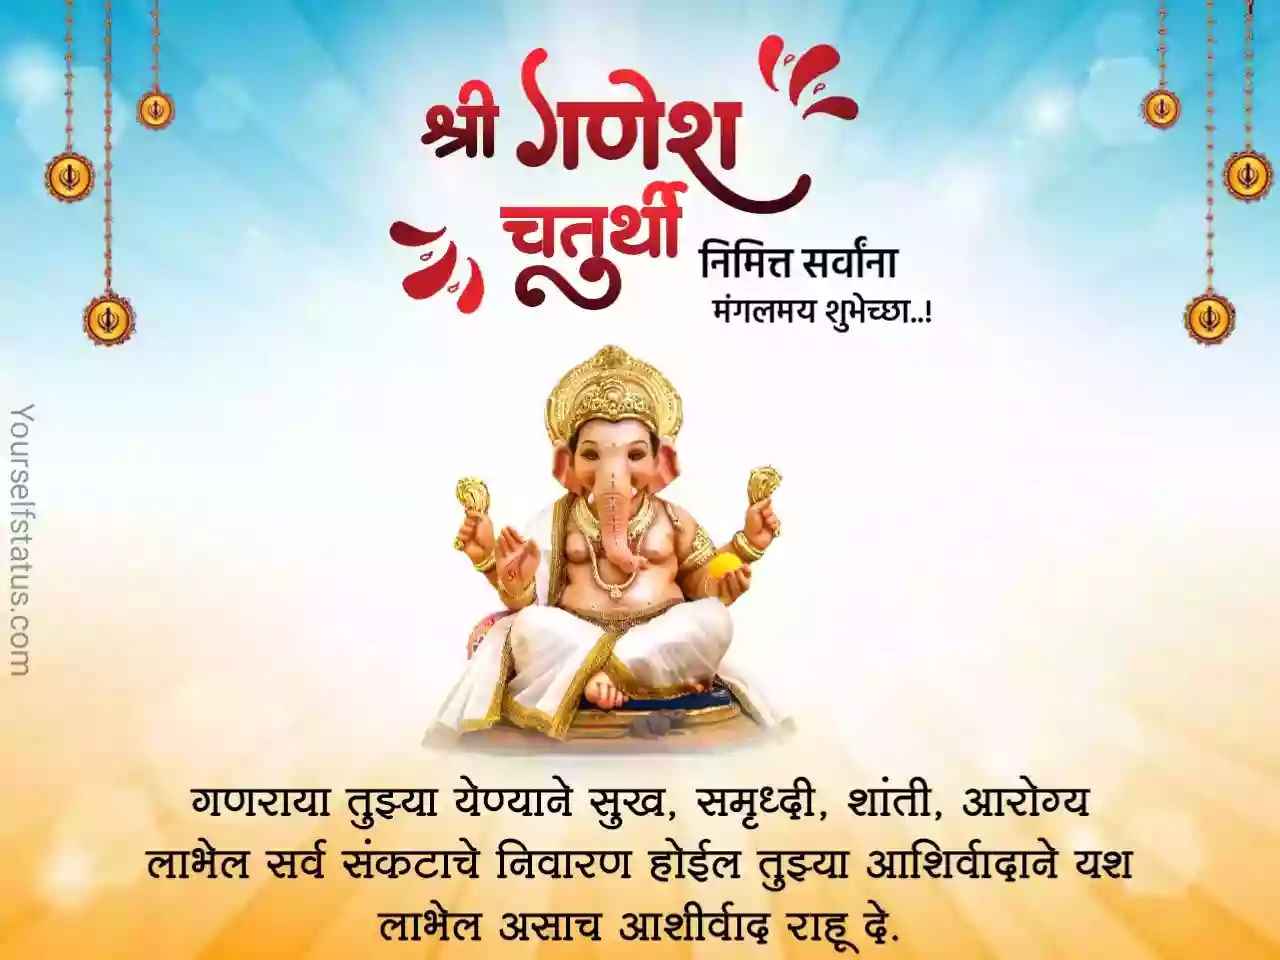 Ganesh chaturthi images download in marathi